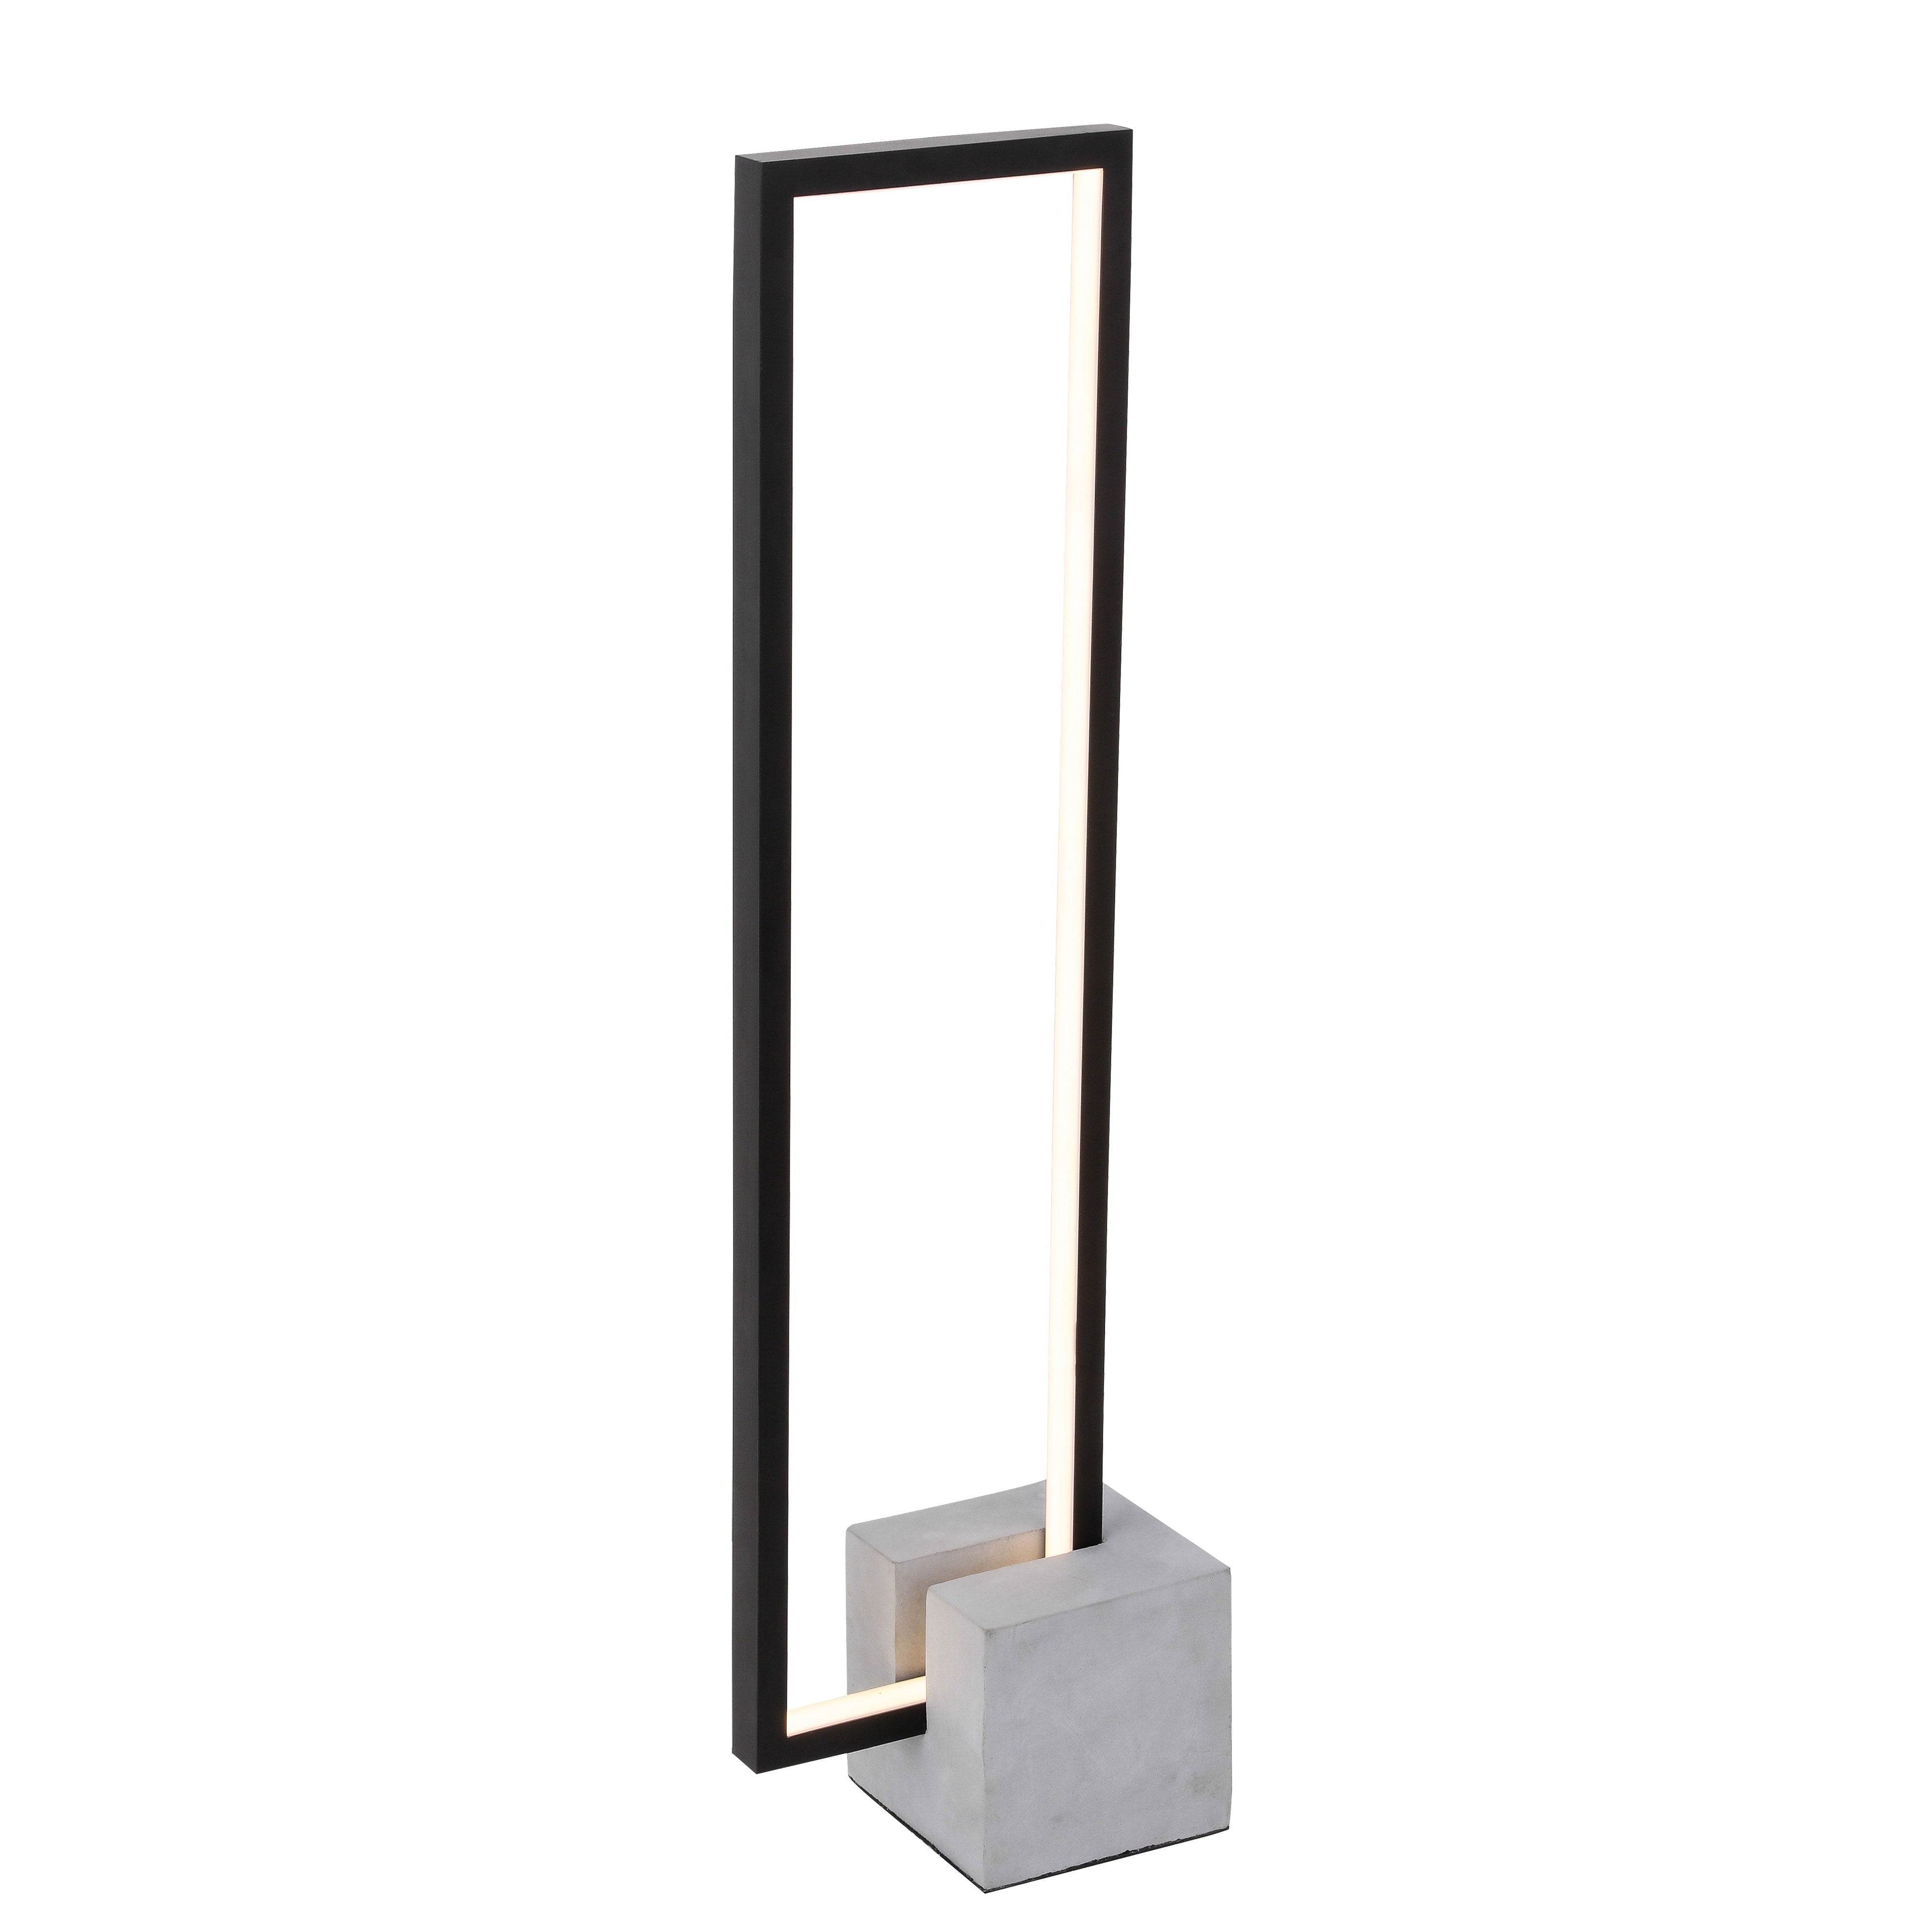 FLORENCE Table lamp Black INTEGRATED LED - FLN-LEDT25-MB | DAINOLITE